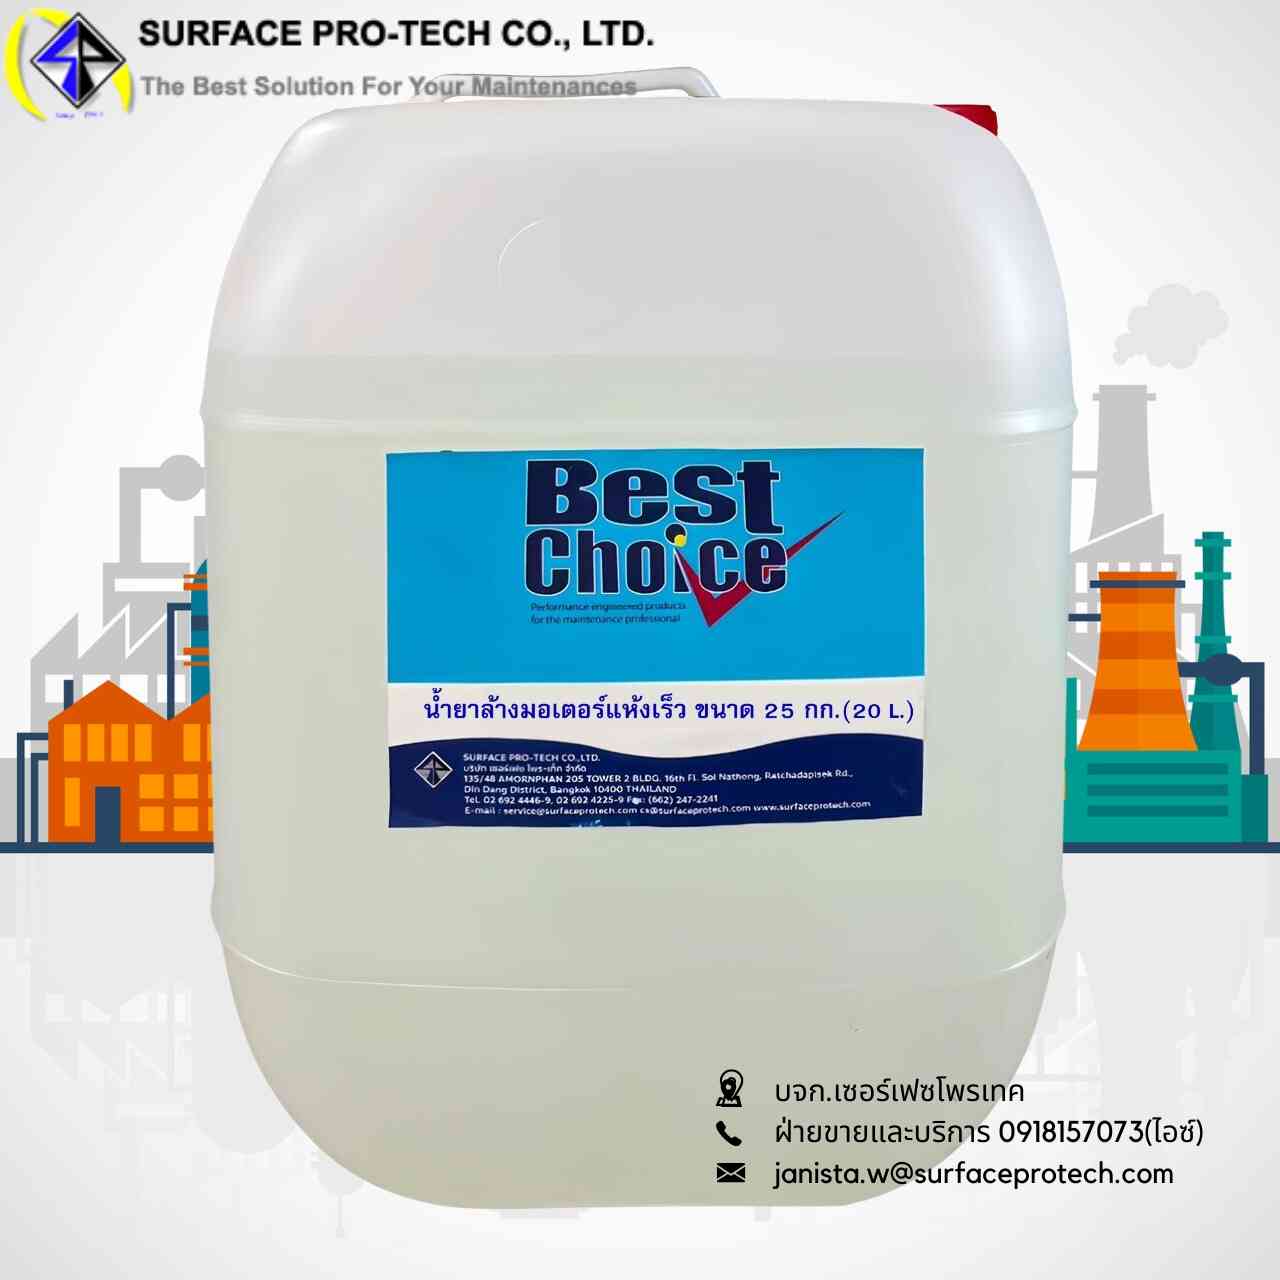 Best Choice Electric Motor Cleaner น้ำยาล้างมอเตอร์ แห้งไว ใช้ขณะเปิดเครื่องได้(Fast Dry Effect)-ติดต่อฝ่ายขาย(ไอซ์)0918157073ค่ะ